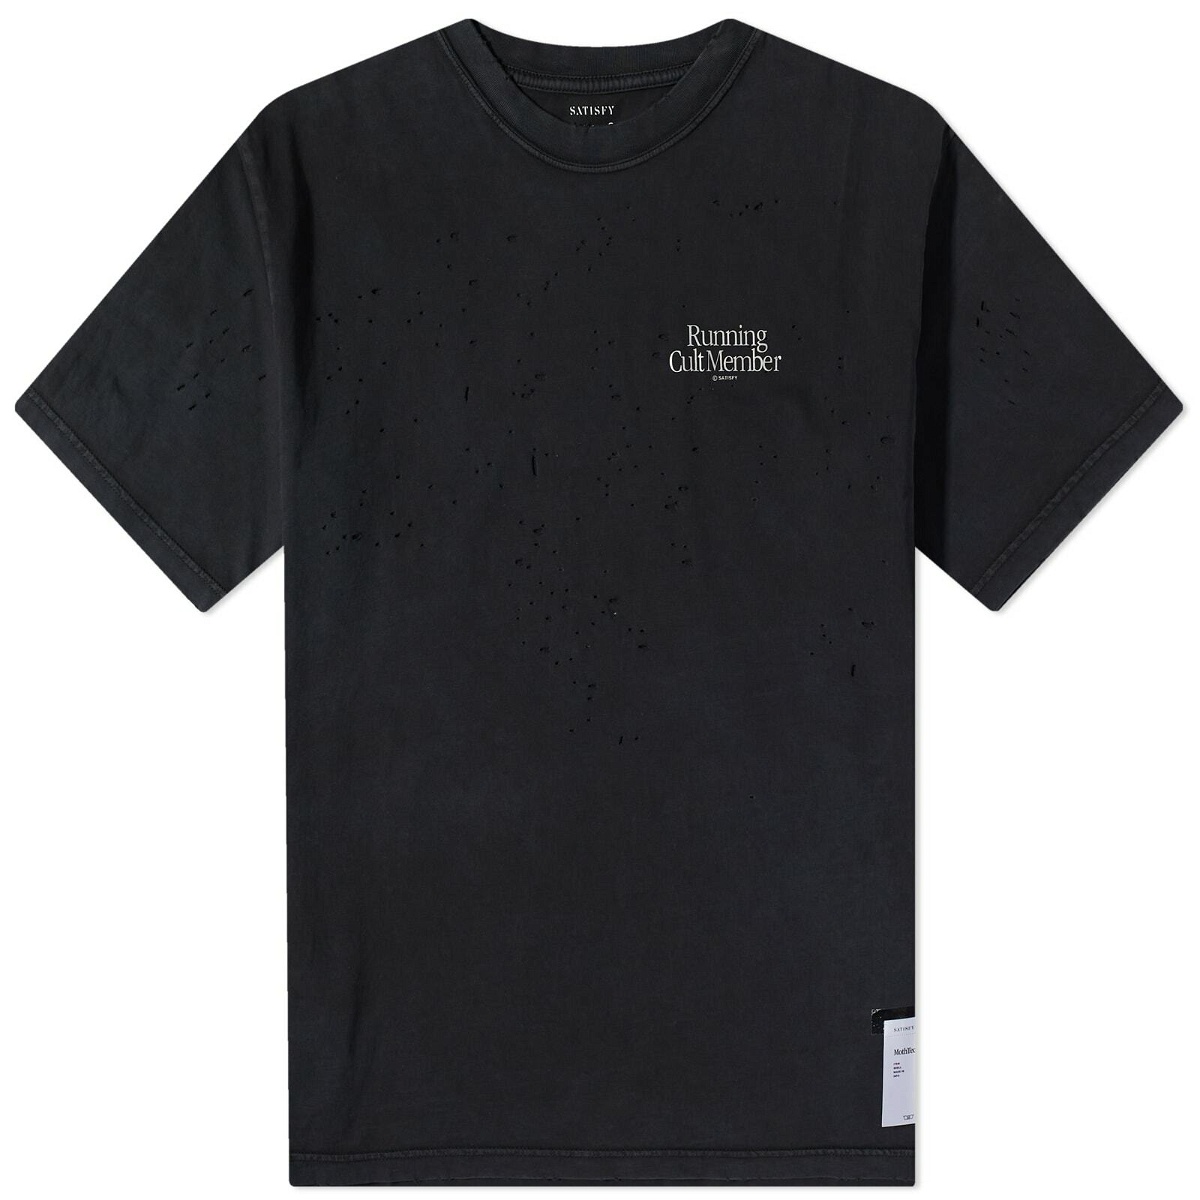 Satisfy Men's MothTech T-Shirt in Black Satisfy